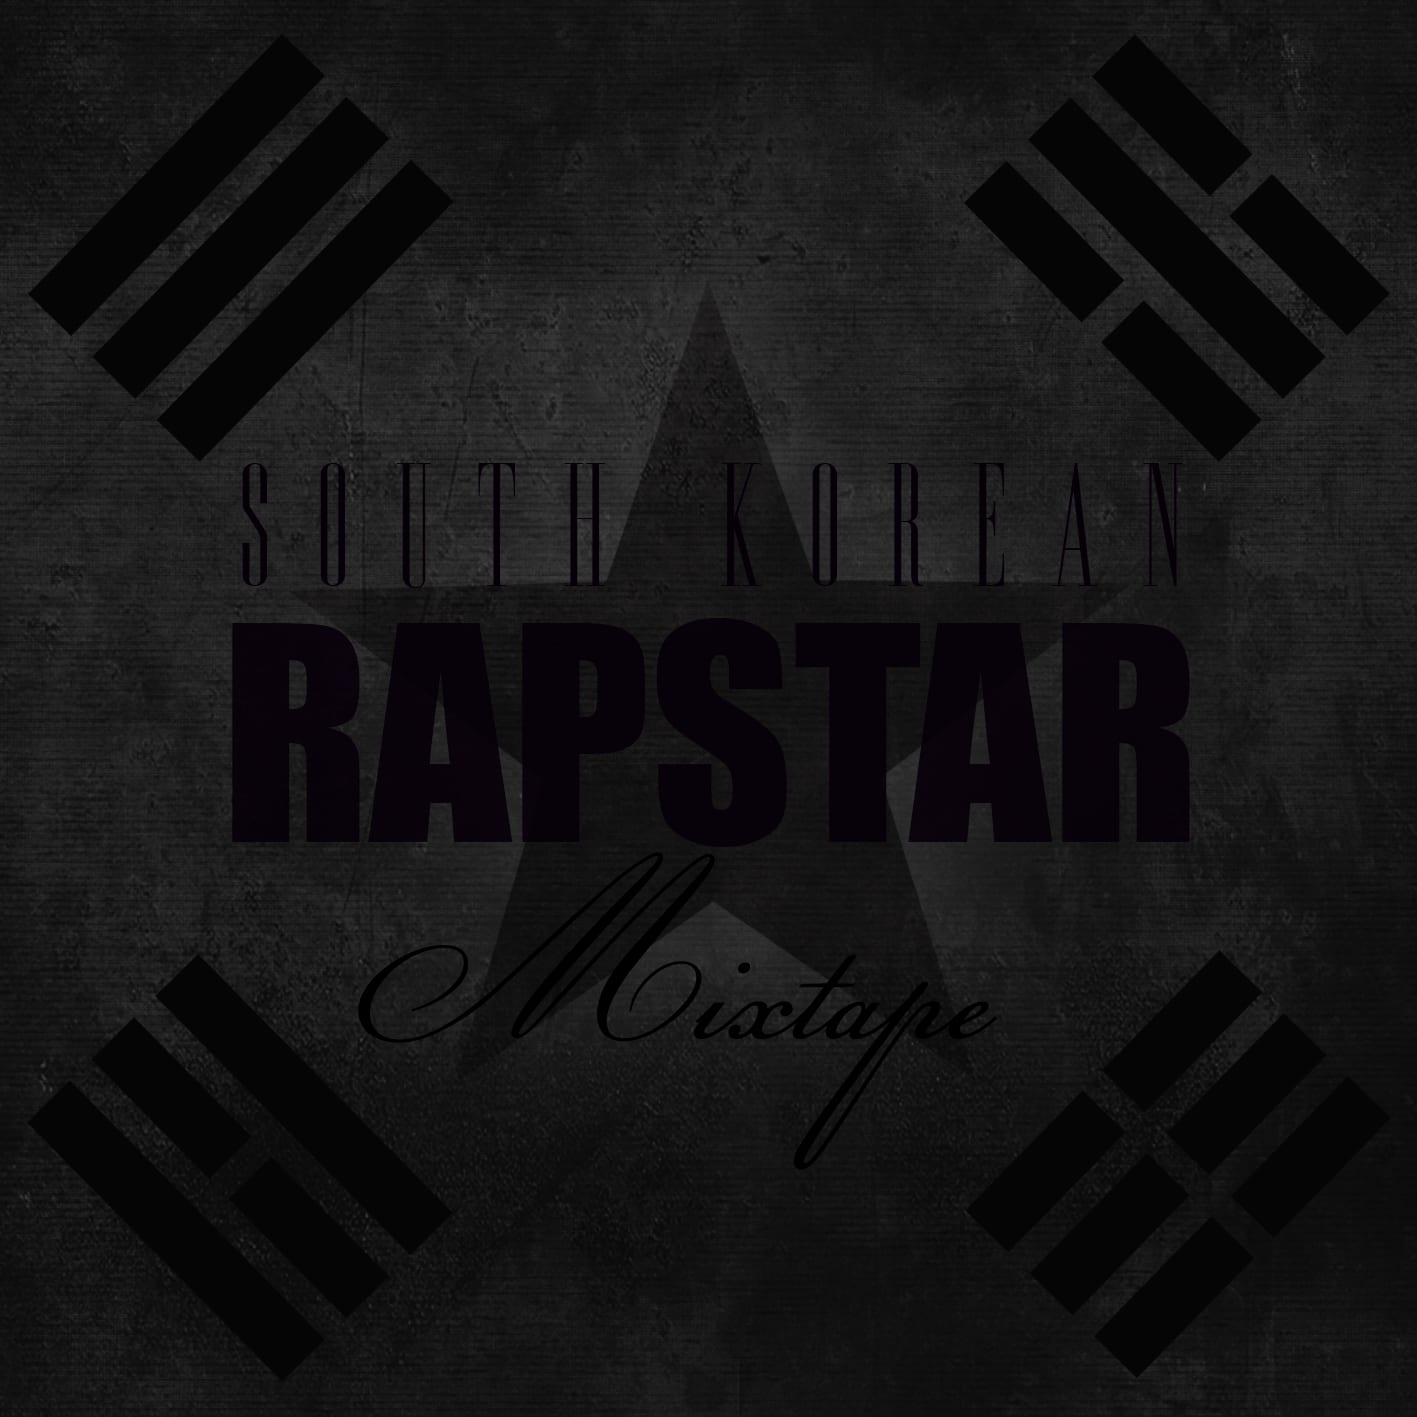 Dok2 - South Korean Rapstar Mixtape cover